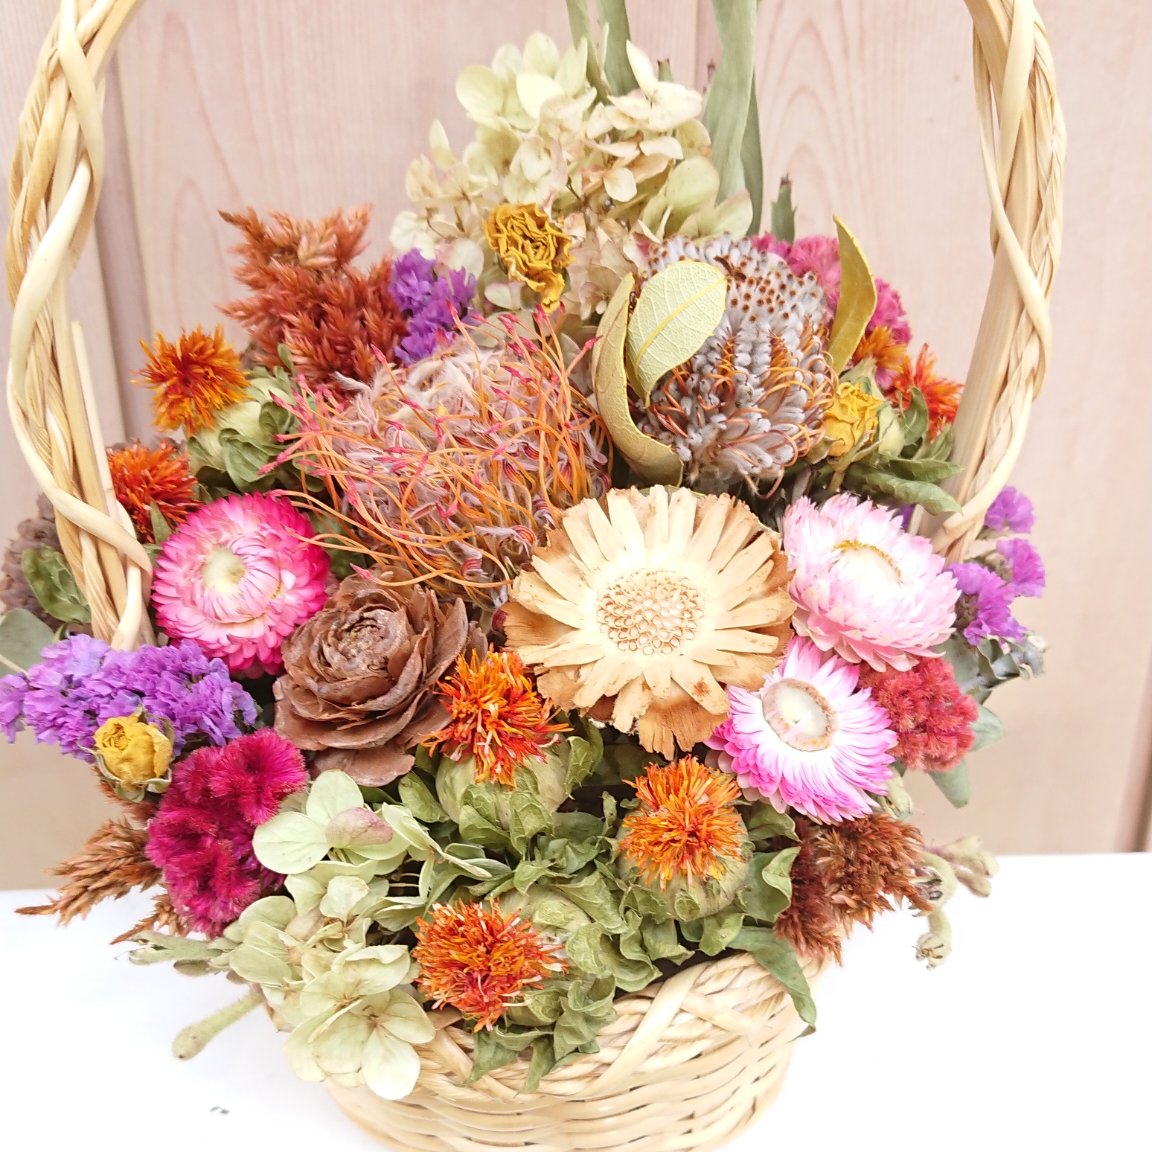 Flowerstory Hijiri On Twitter ピンクッションとバンクシアのバスケットアレンジ ドライフラワー フラワーアレンジメント 花のある暮らし 花好きな人と繋がりたい